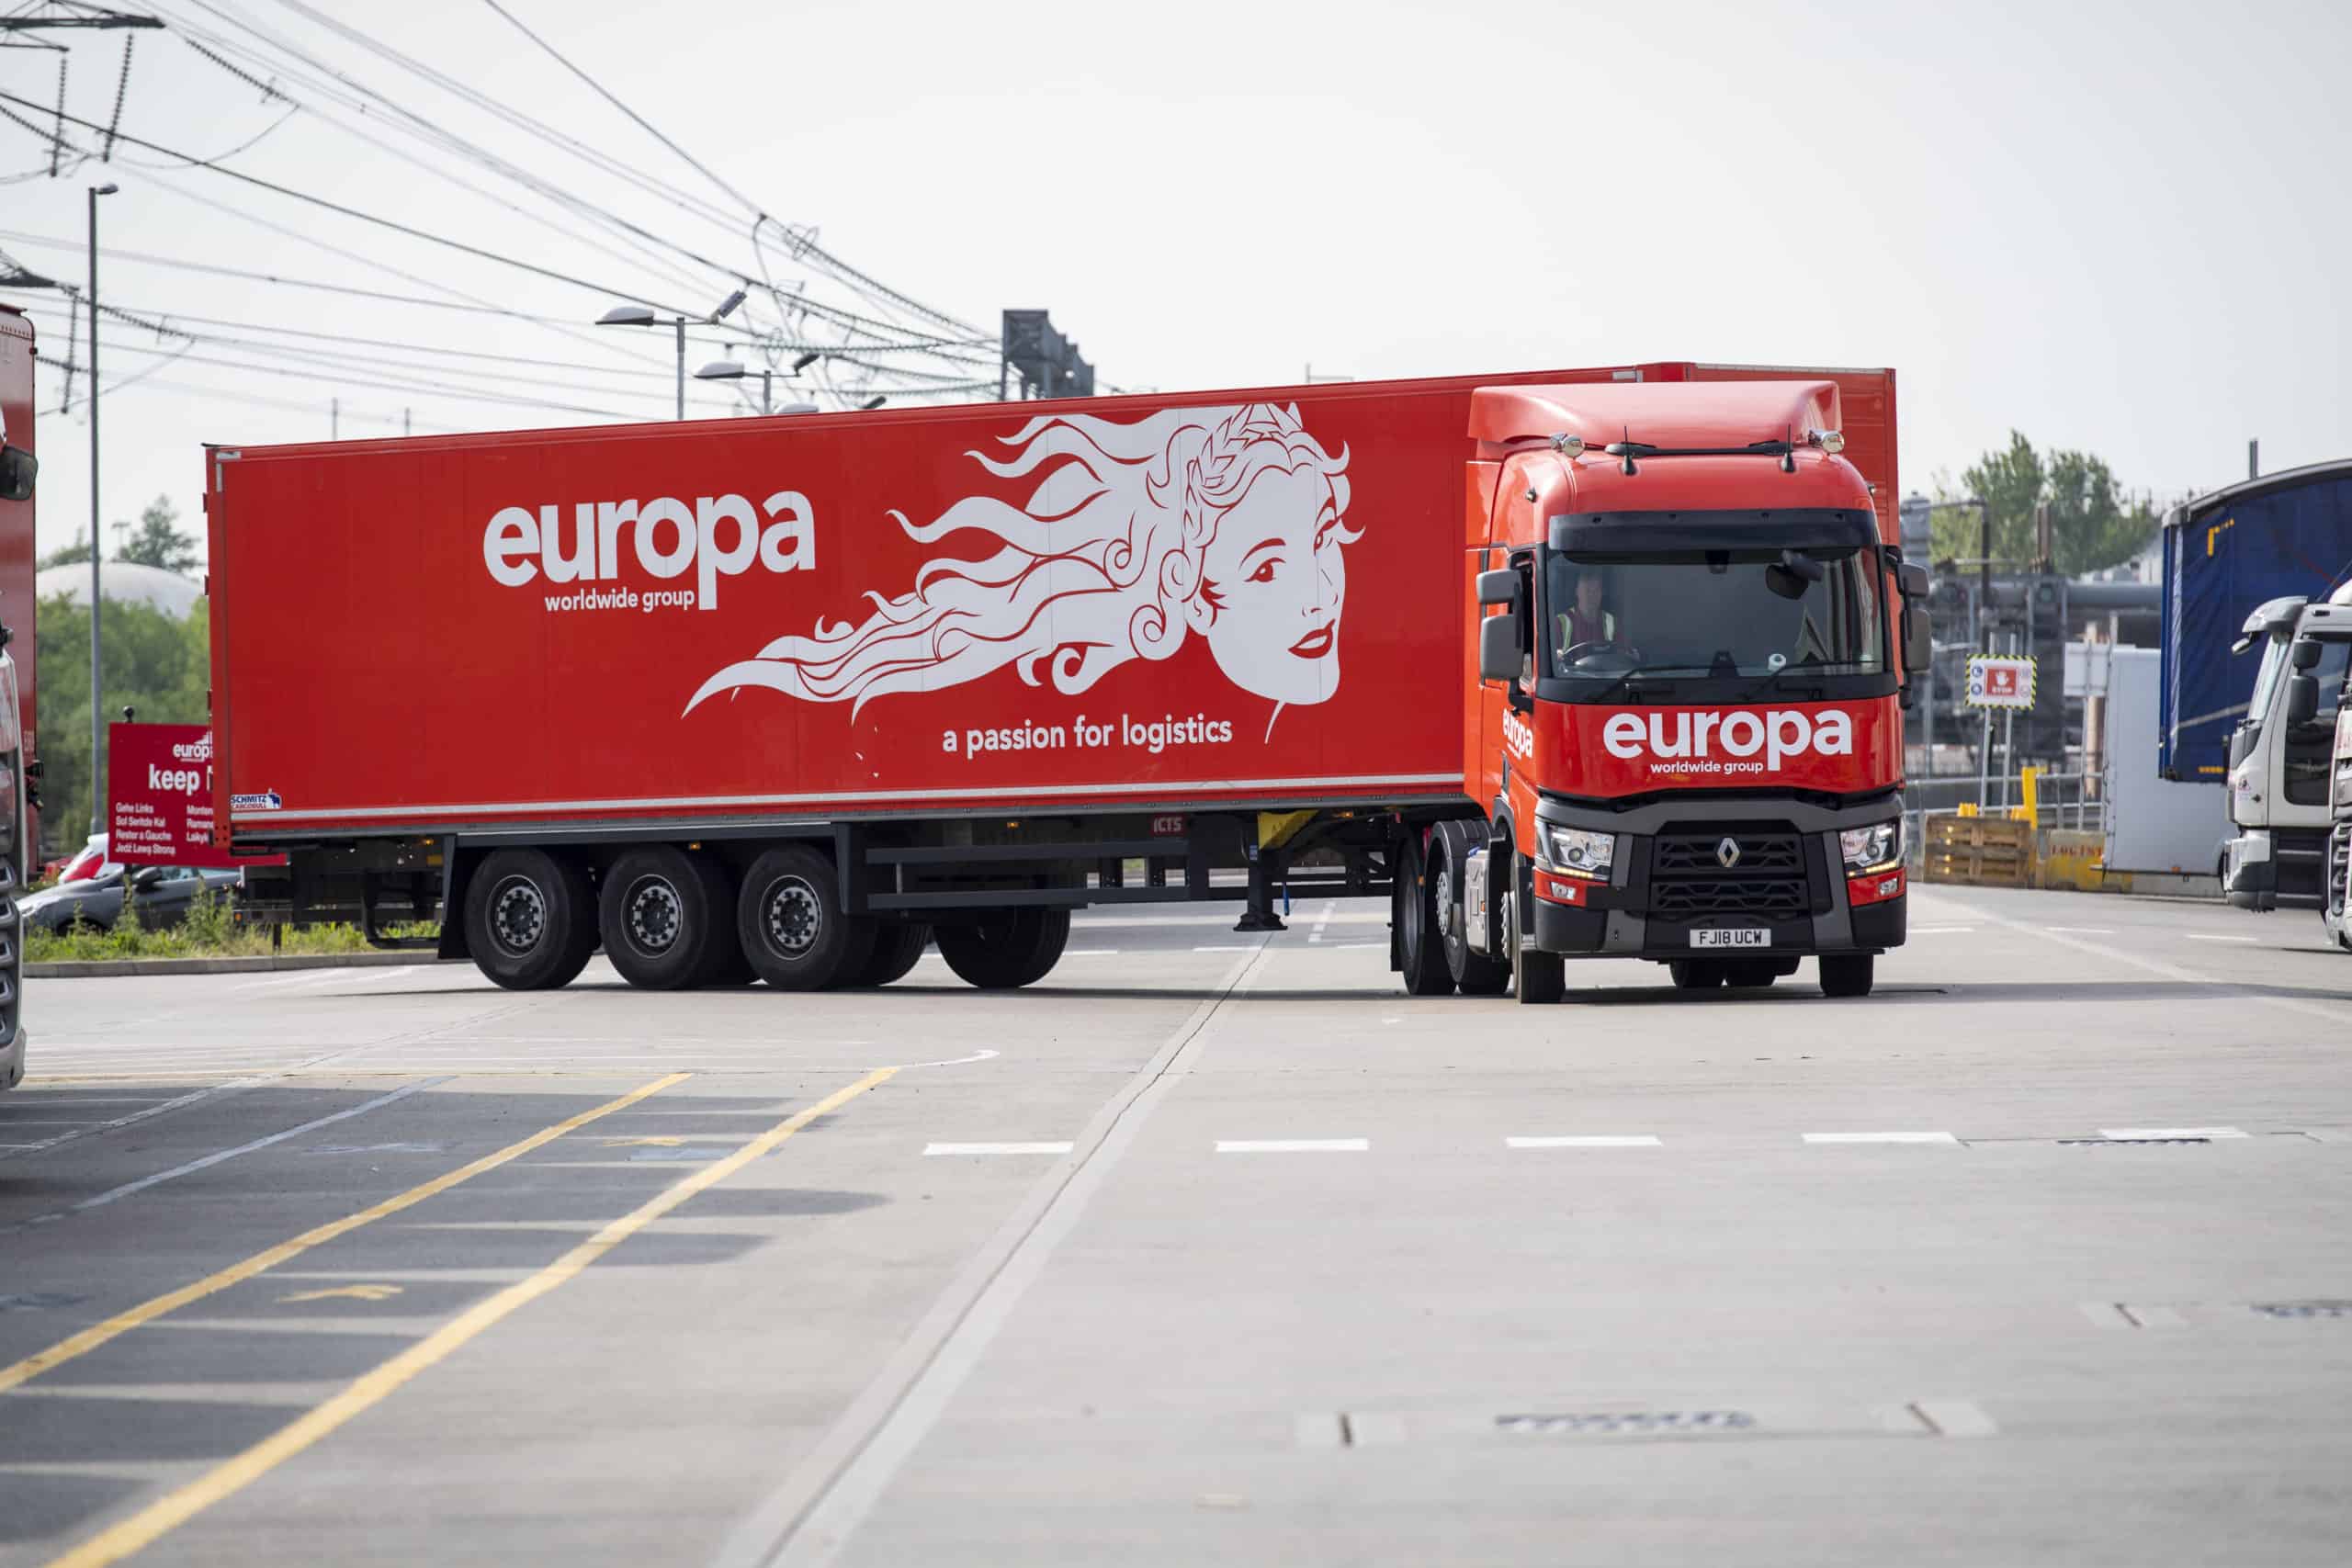 Europa truck